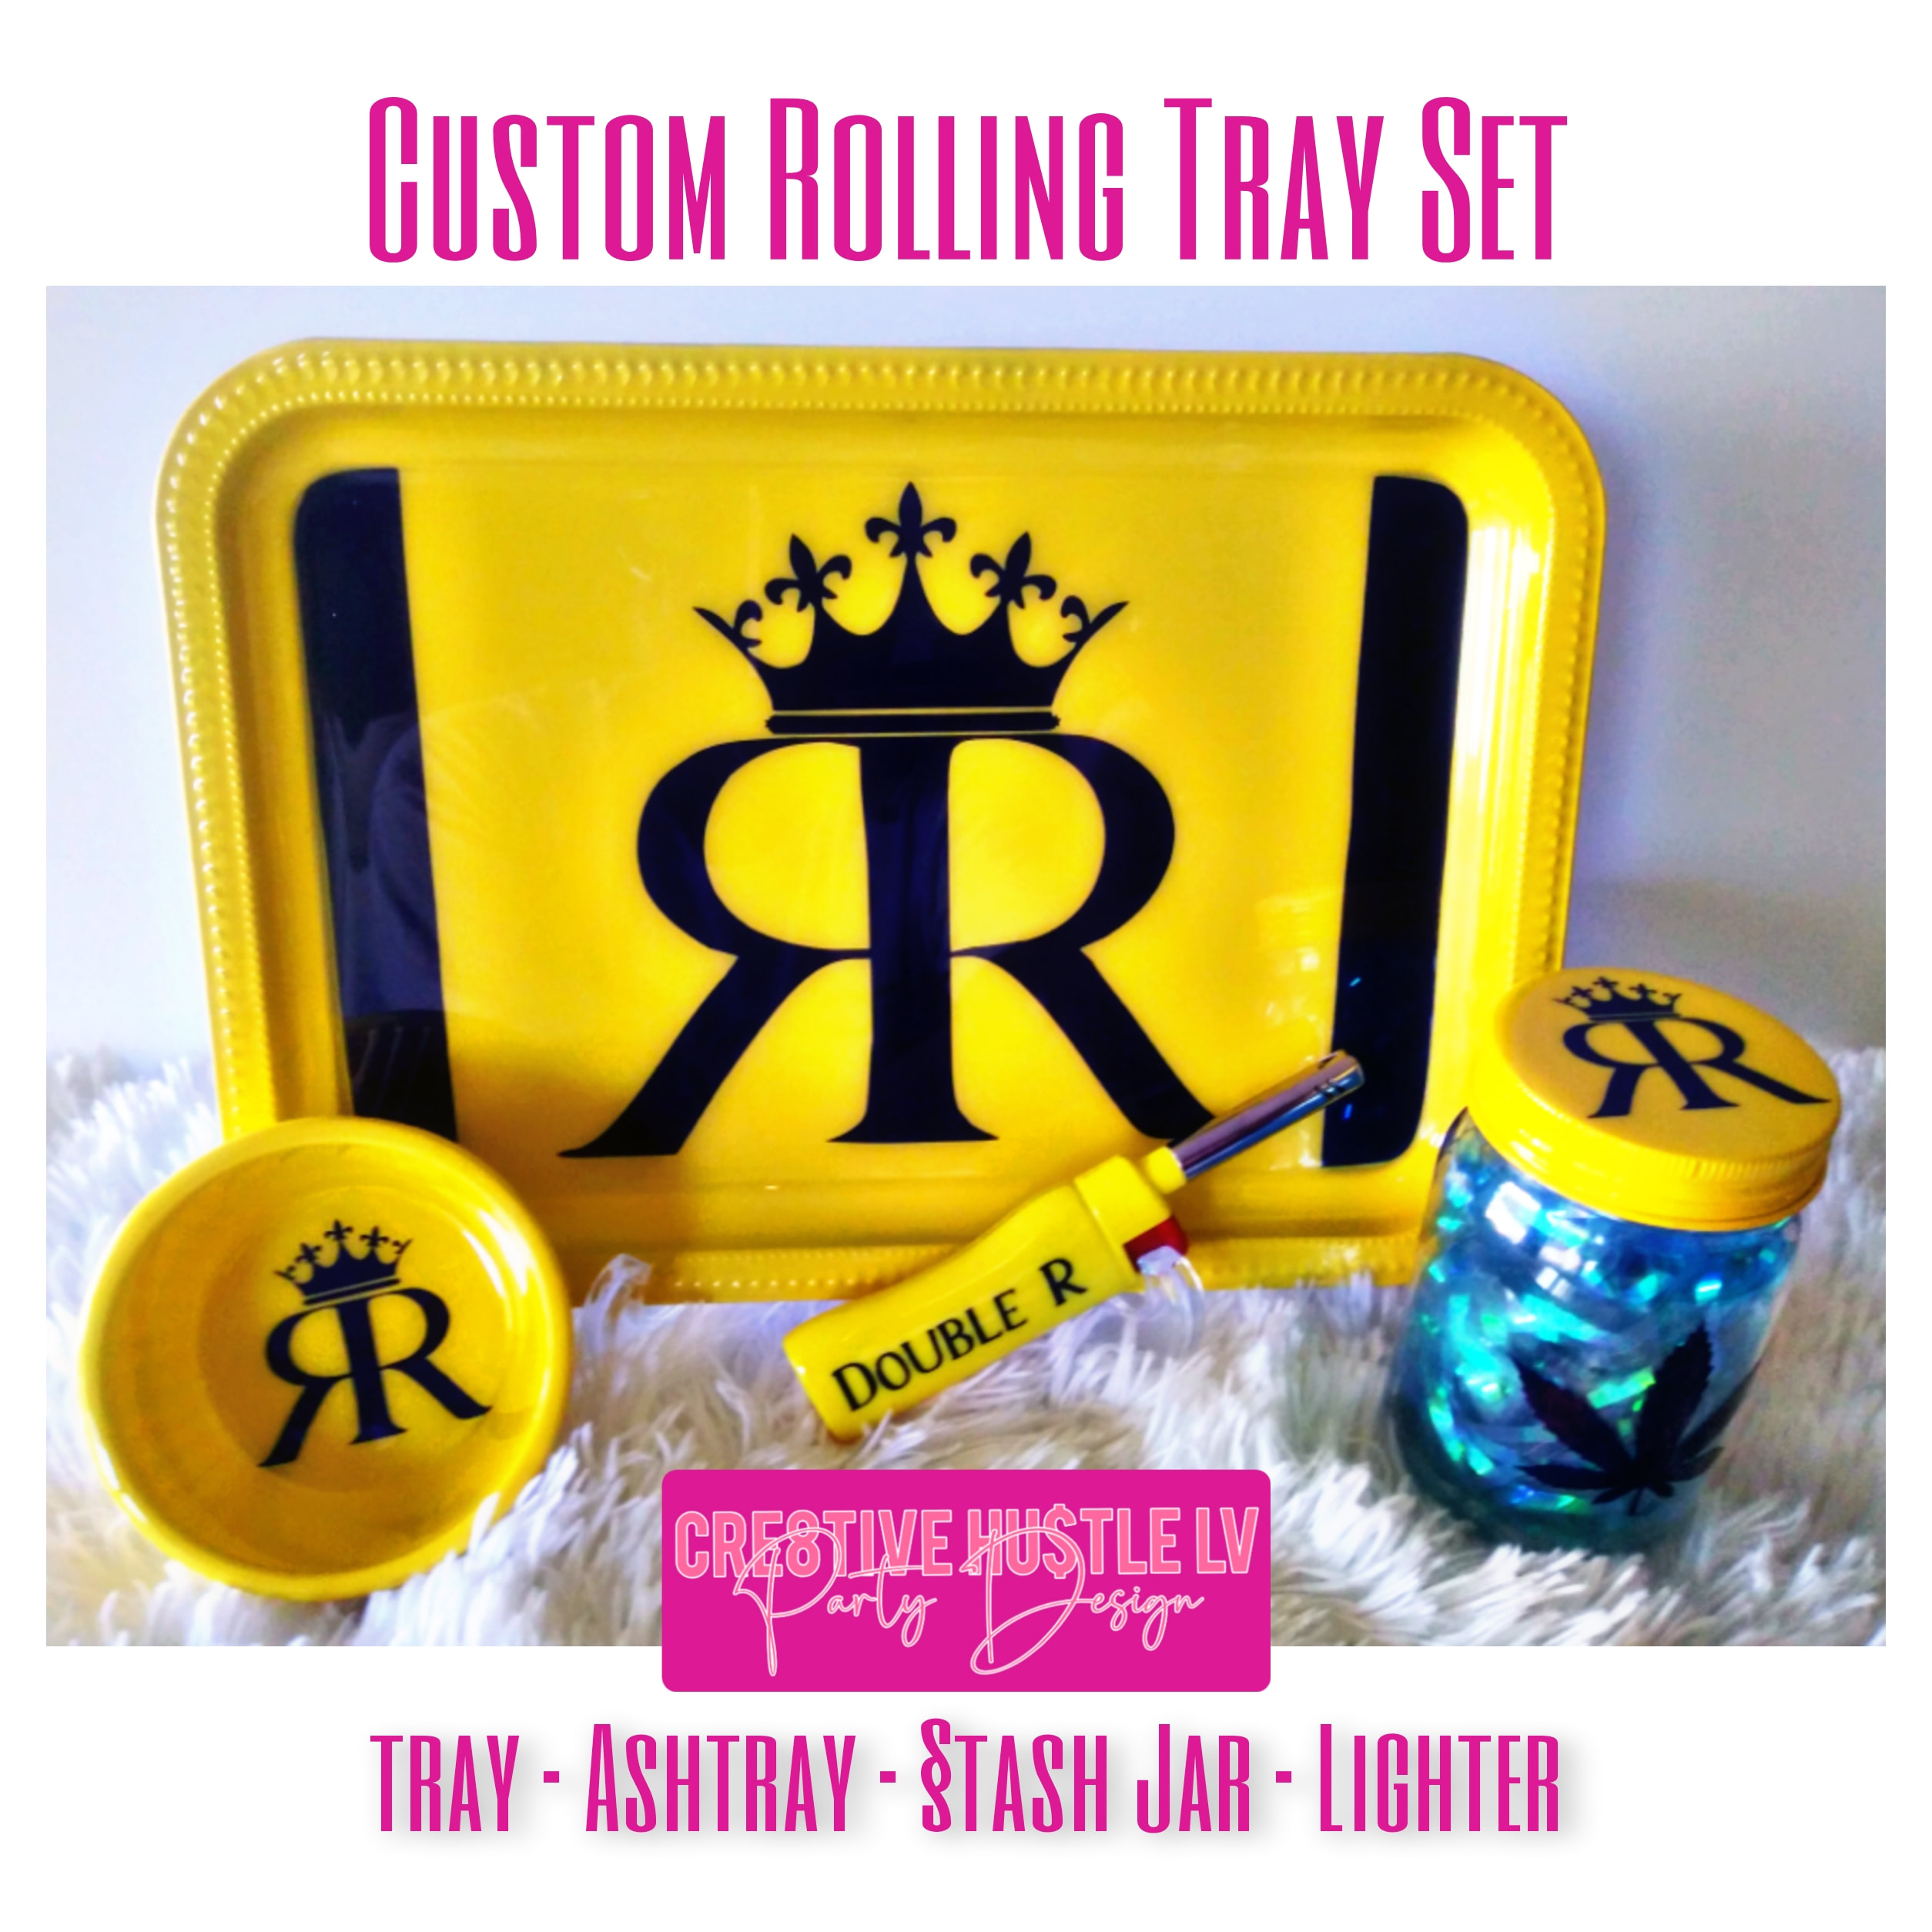 Custom Rolling Tray Set